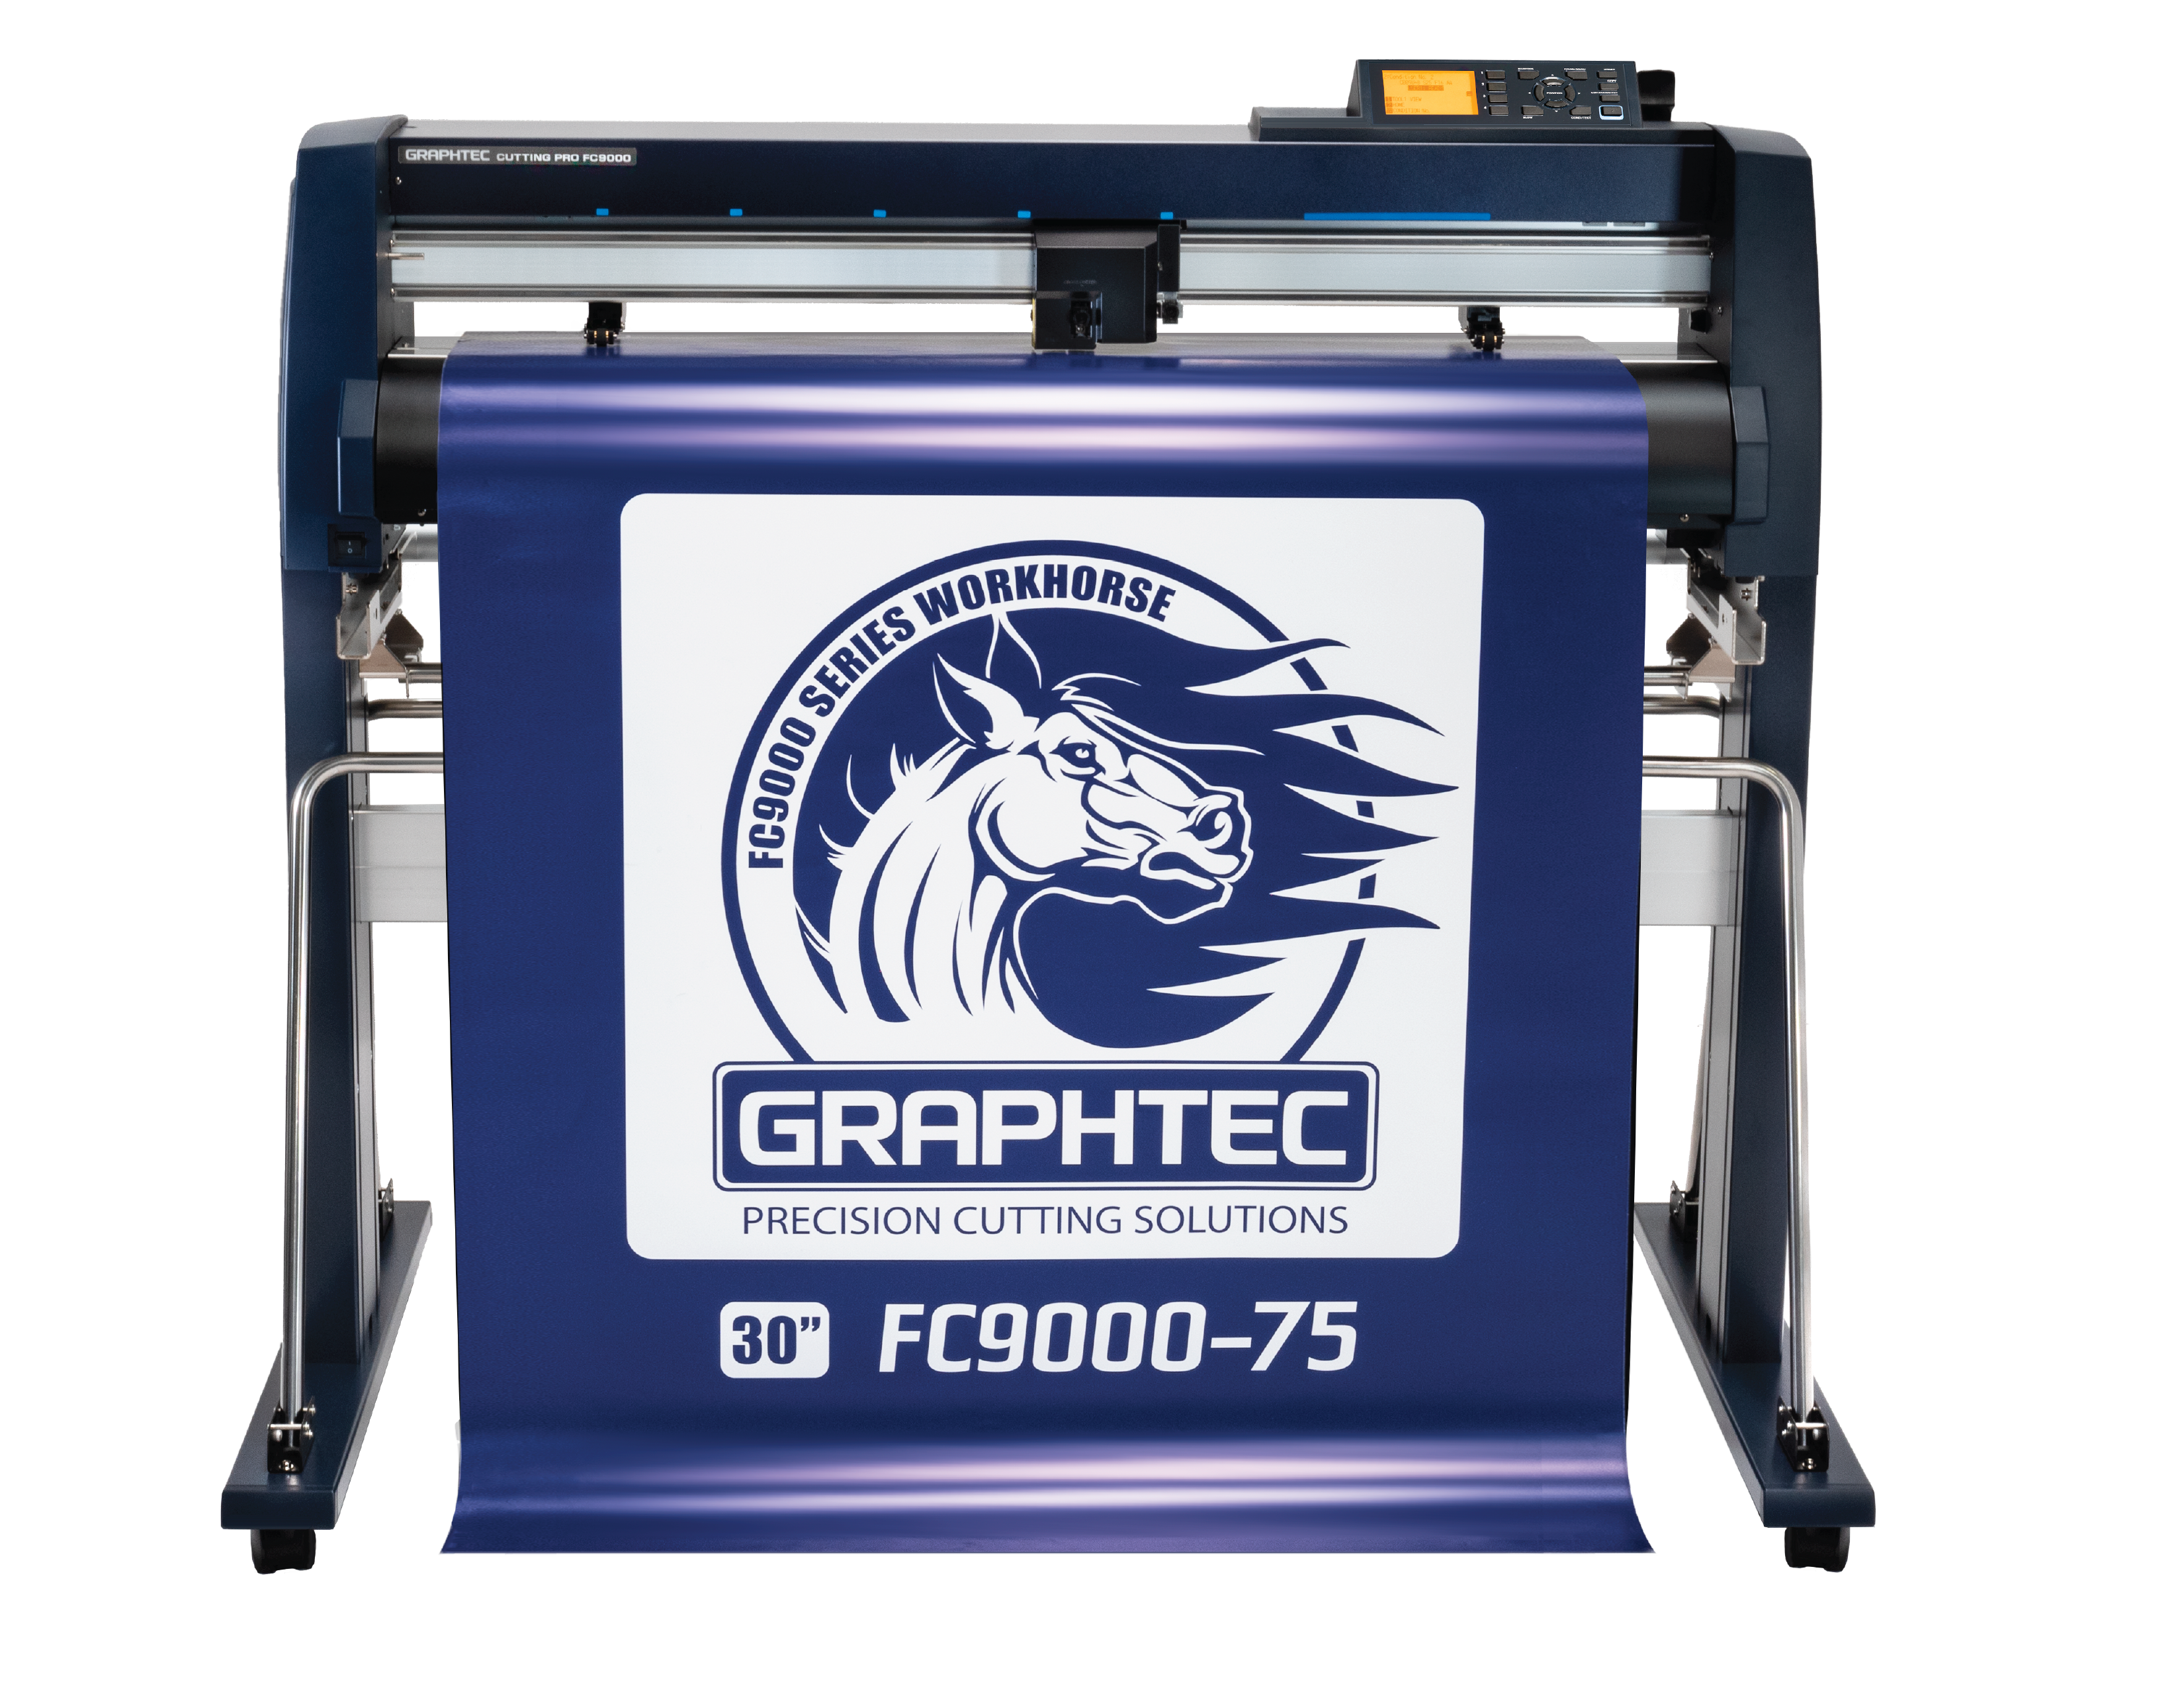 Graphtec Wide Format Cutter Series